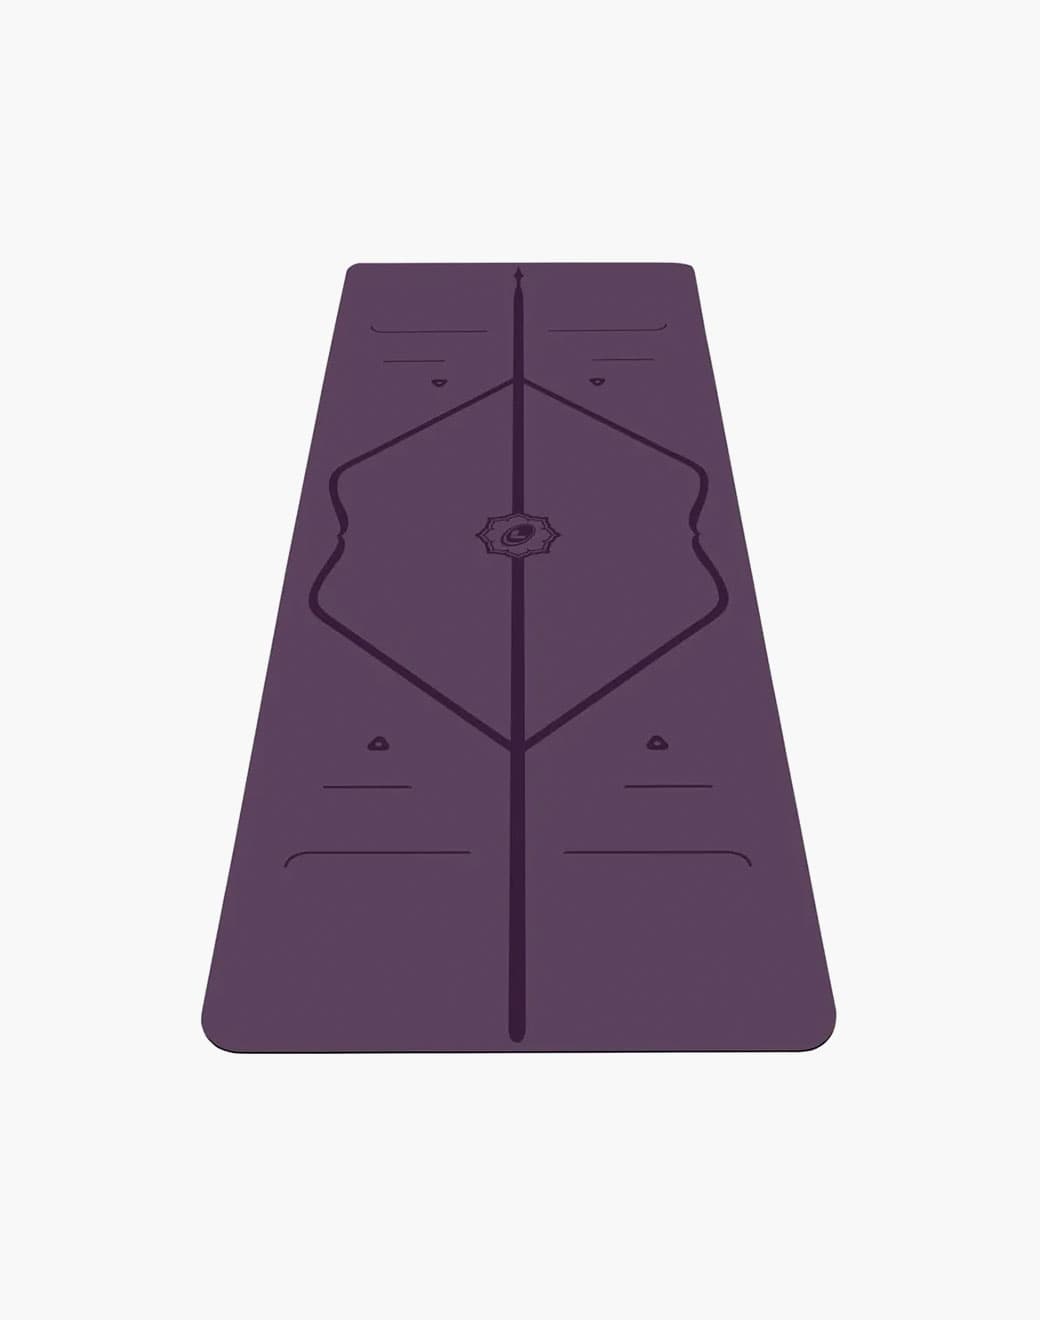 Liforme Purple Earth 4.2mm Yoga Matı 1